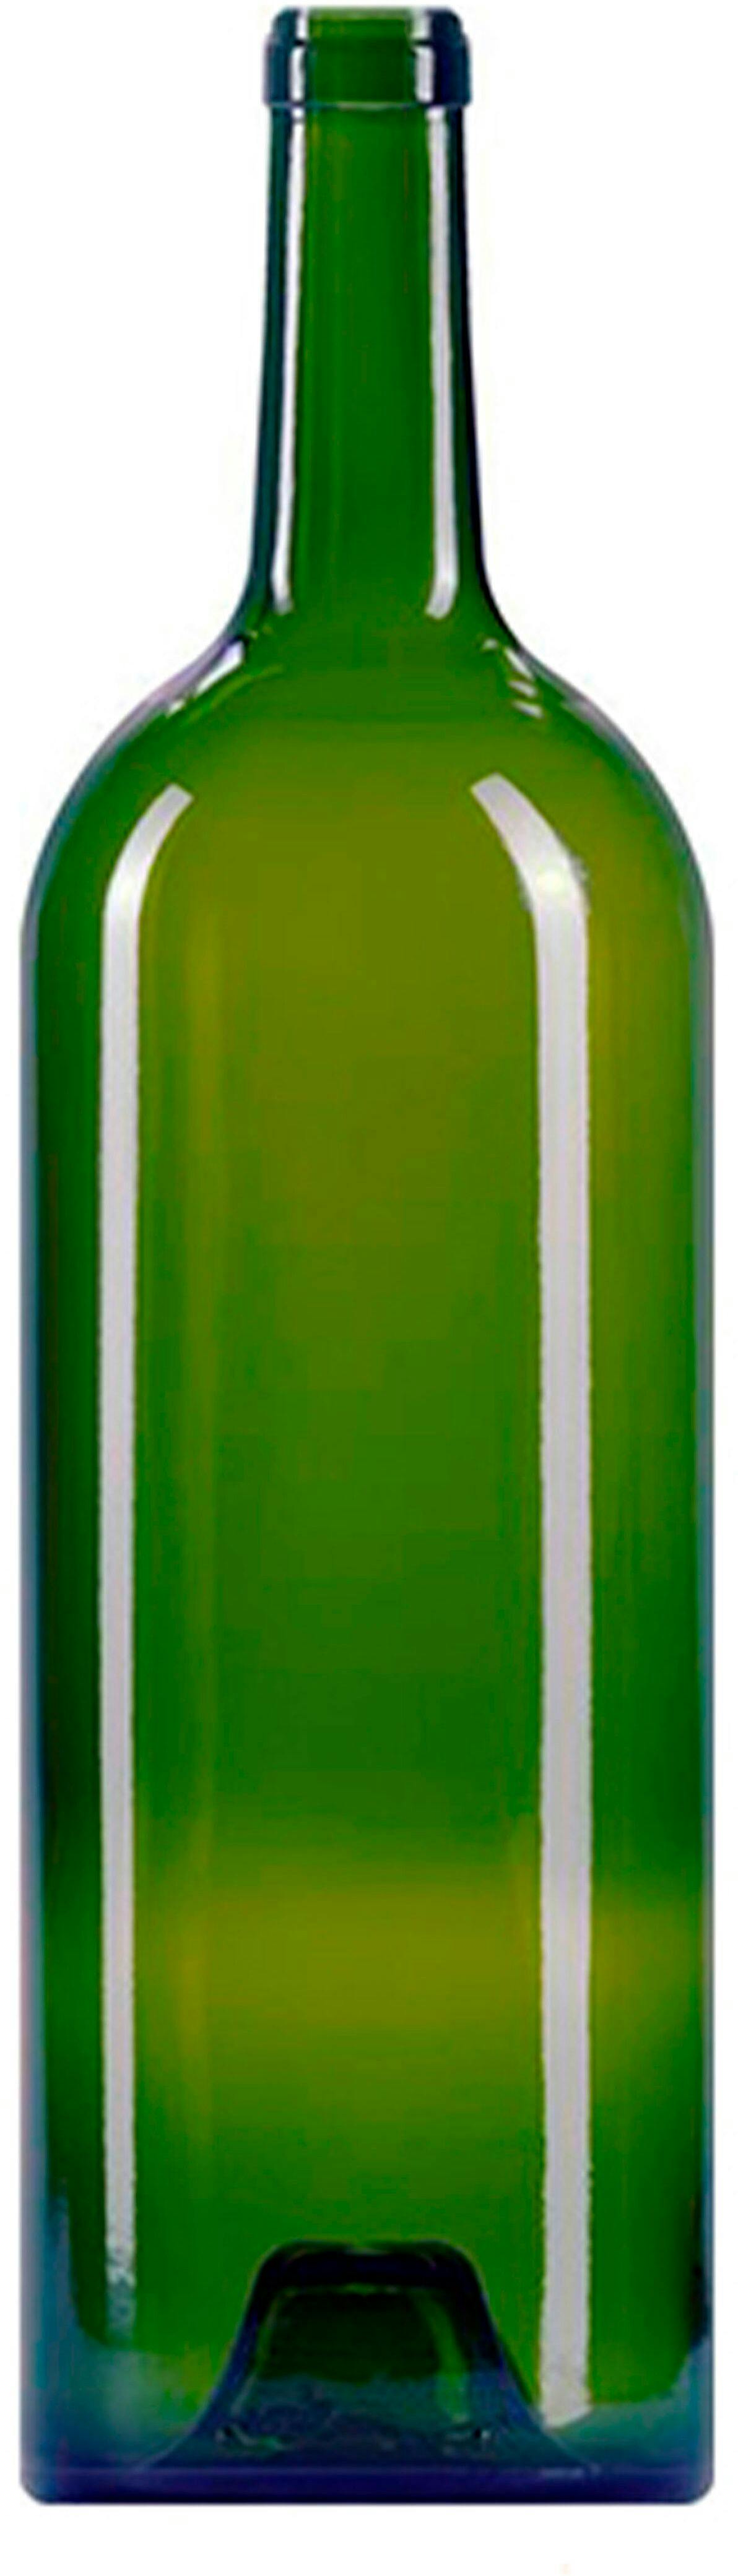 Bouteille Bordelaise   GRAND VIN 1500 ml BG-Bouchon